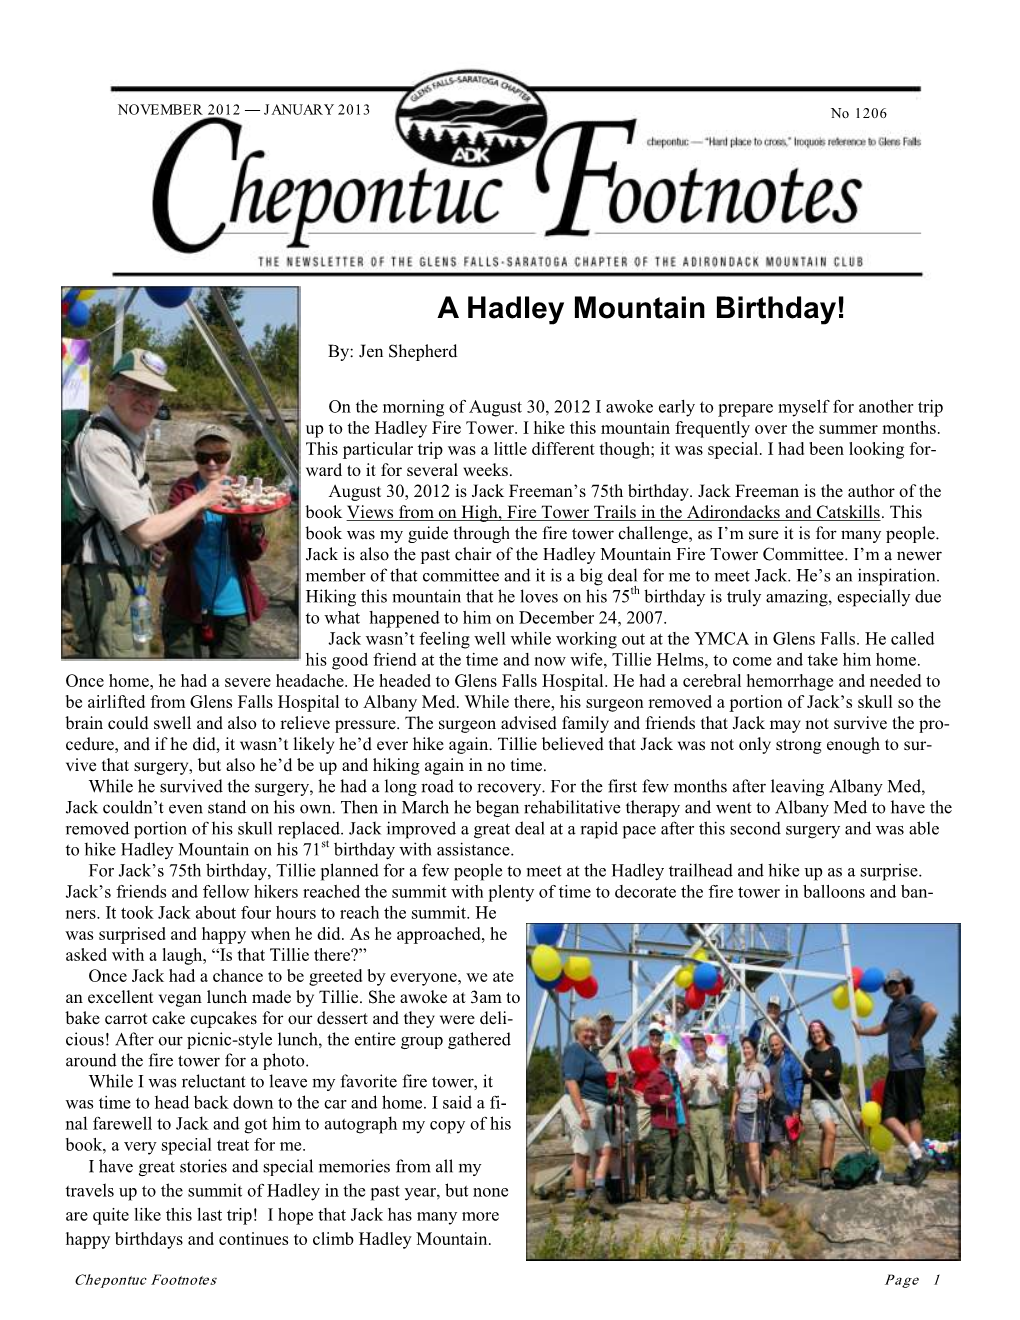 A Hadley Mountain Birthday!